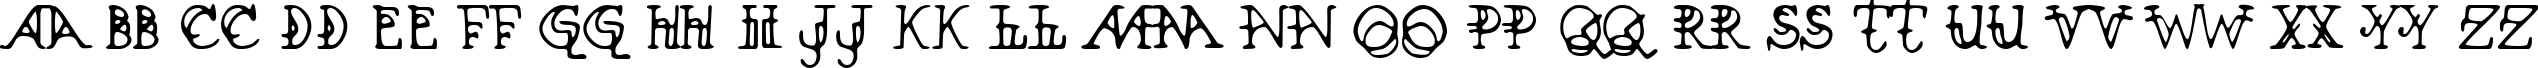 Пример написания английского алфавита шрифтом Xenowort